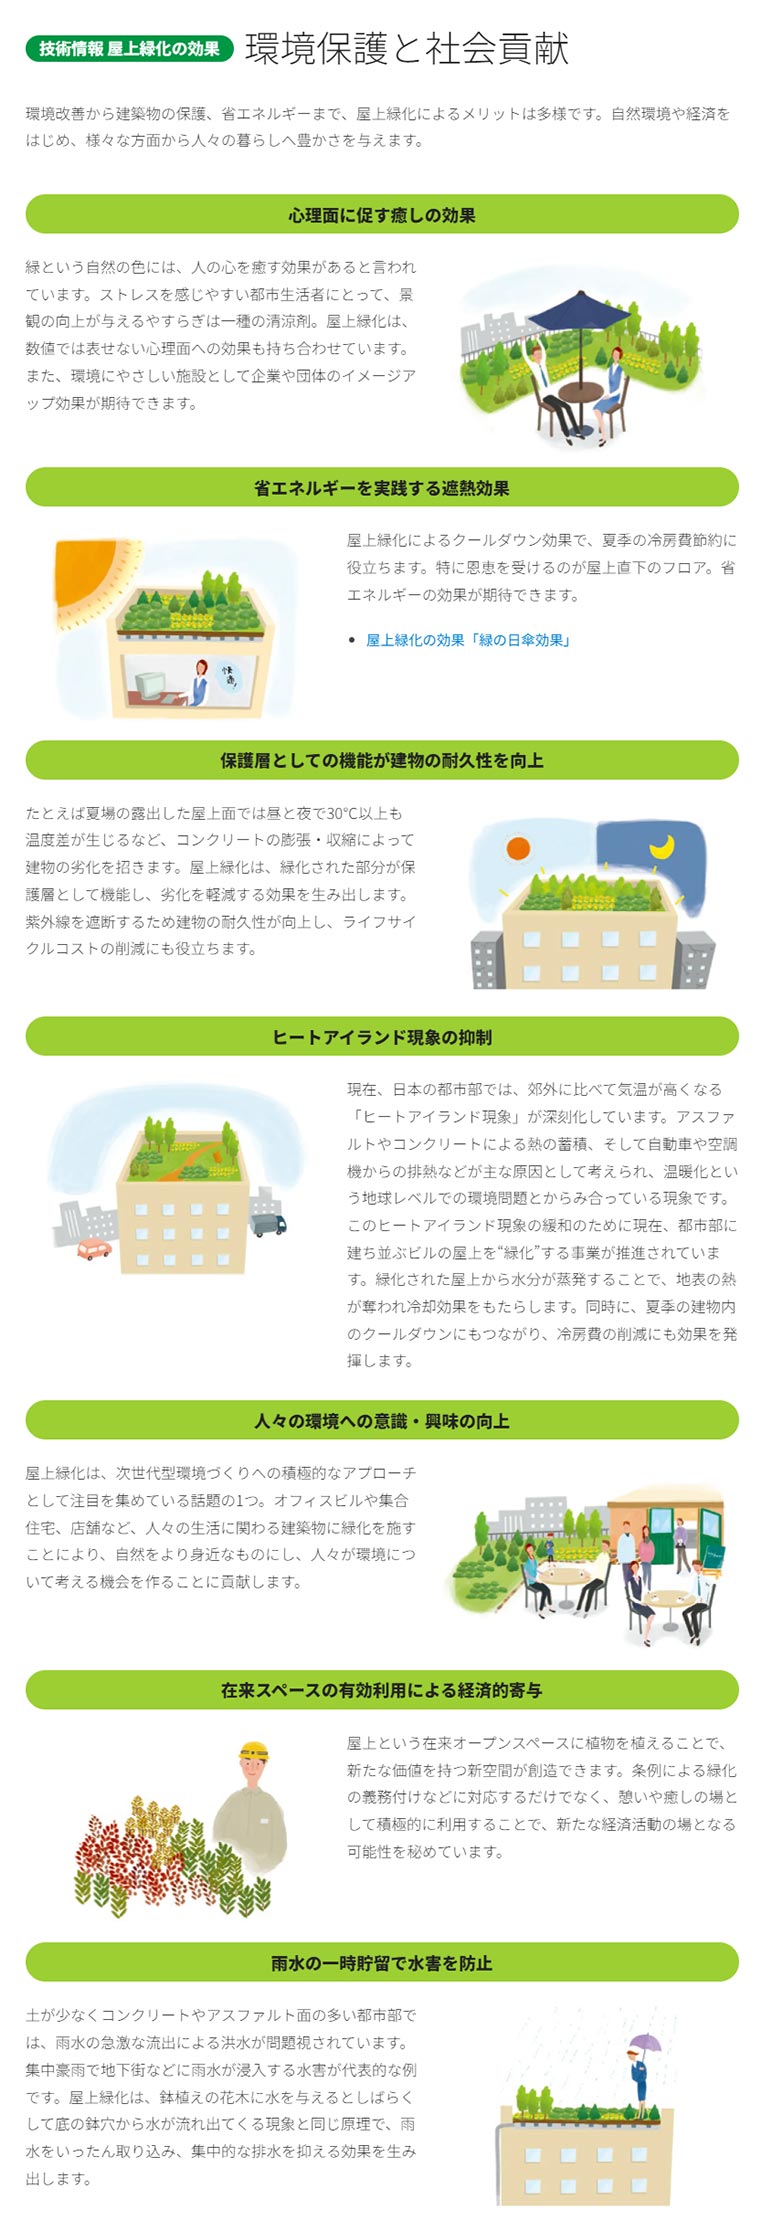 田島緑化工事株式会社 紹介ページ 屋上緑化の専門会社です　屋上緑化の効果 環境保護と社会貢献